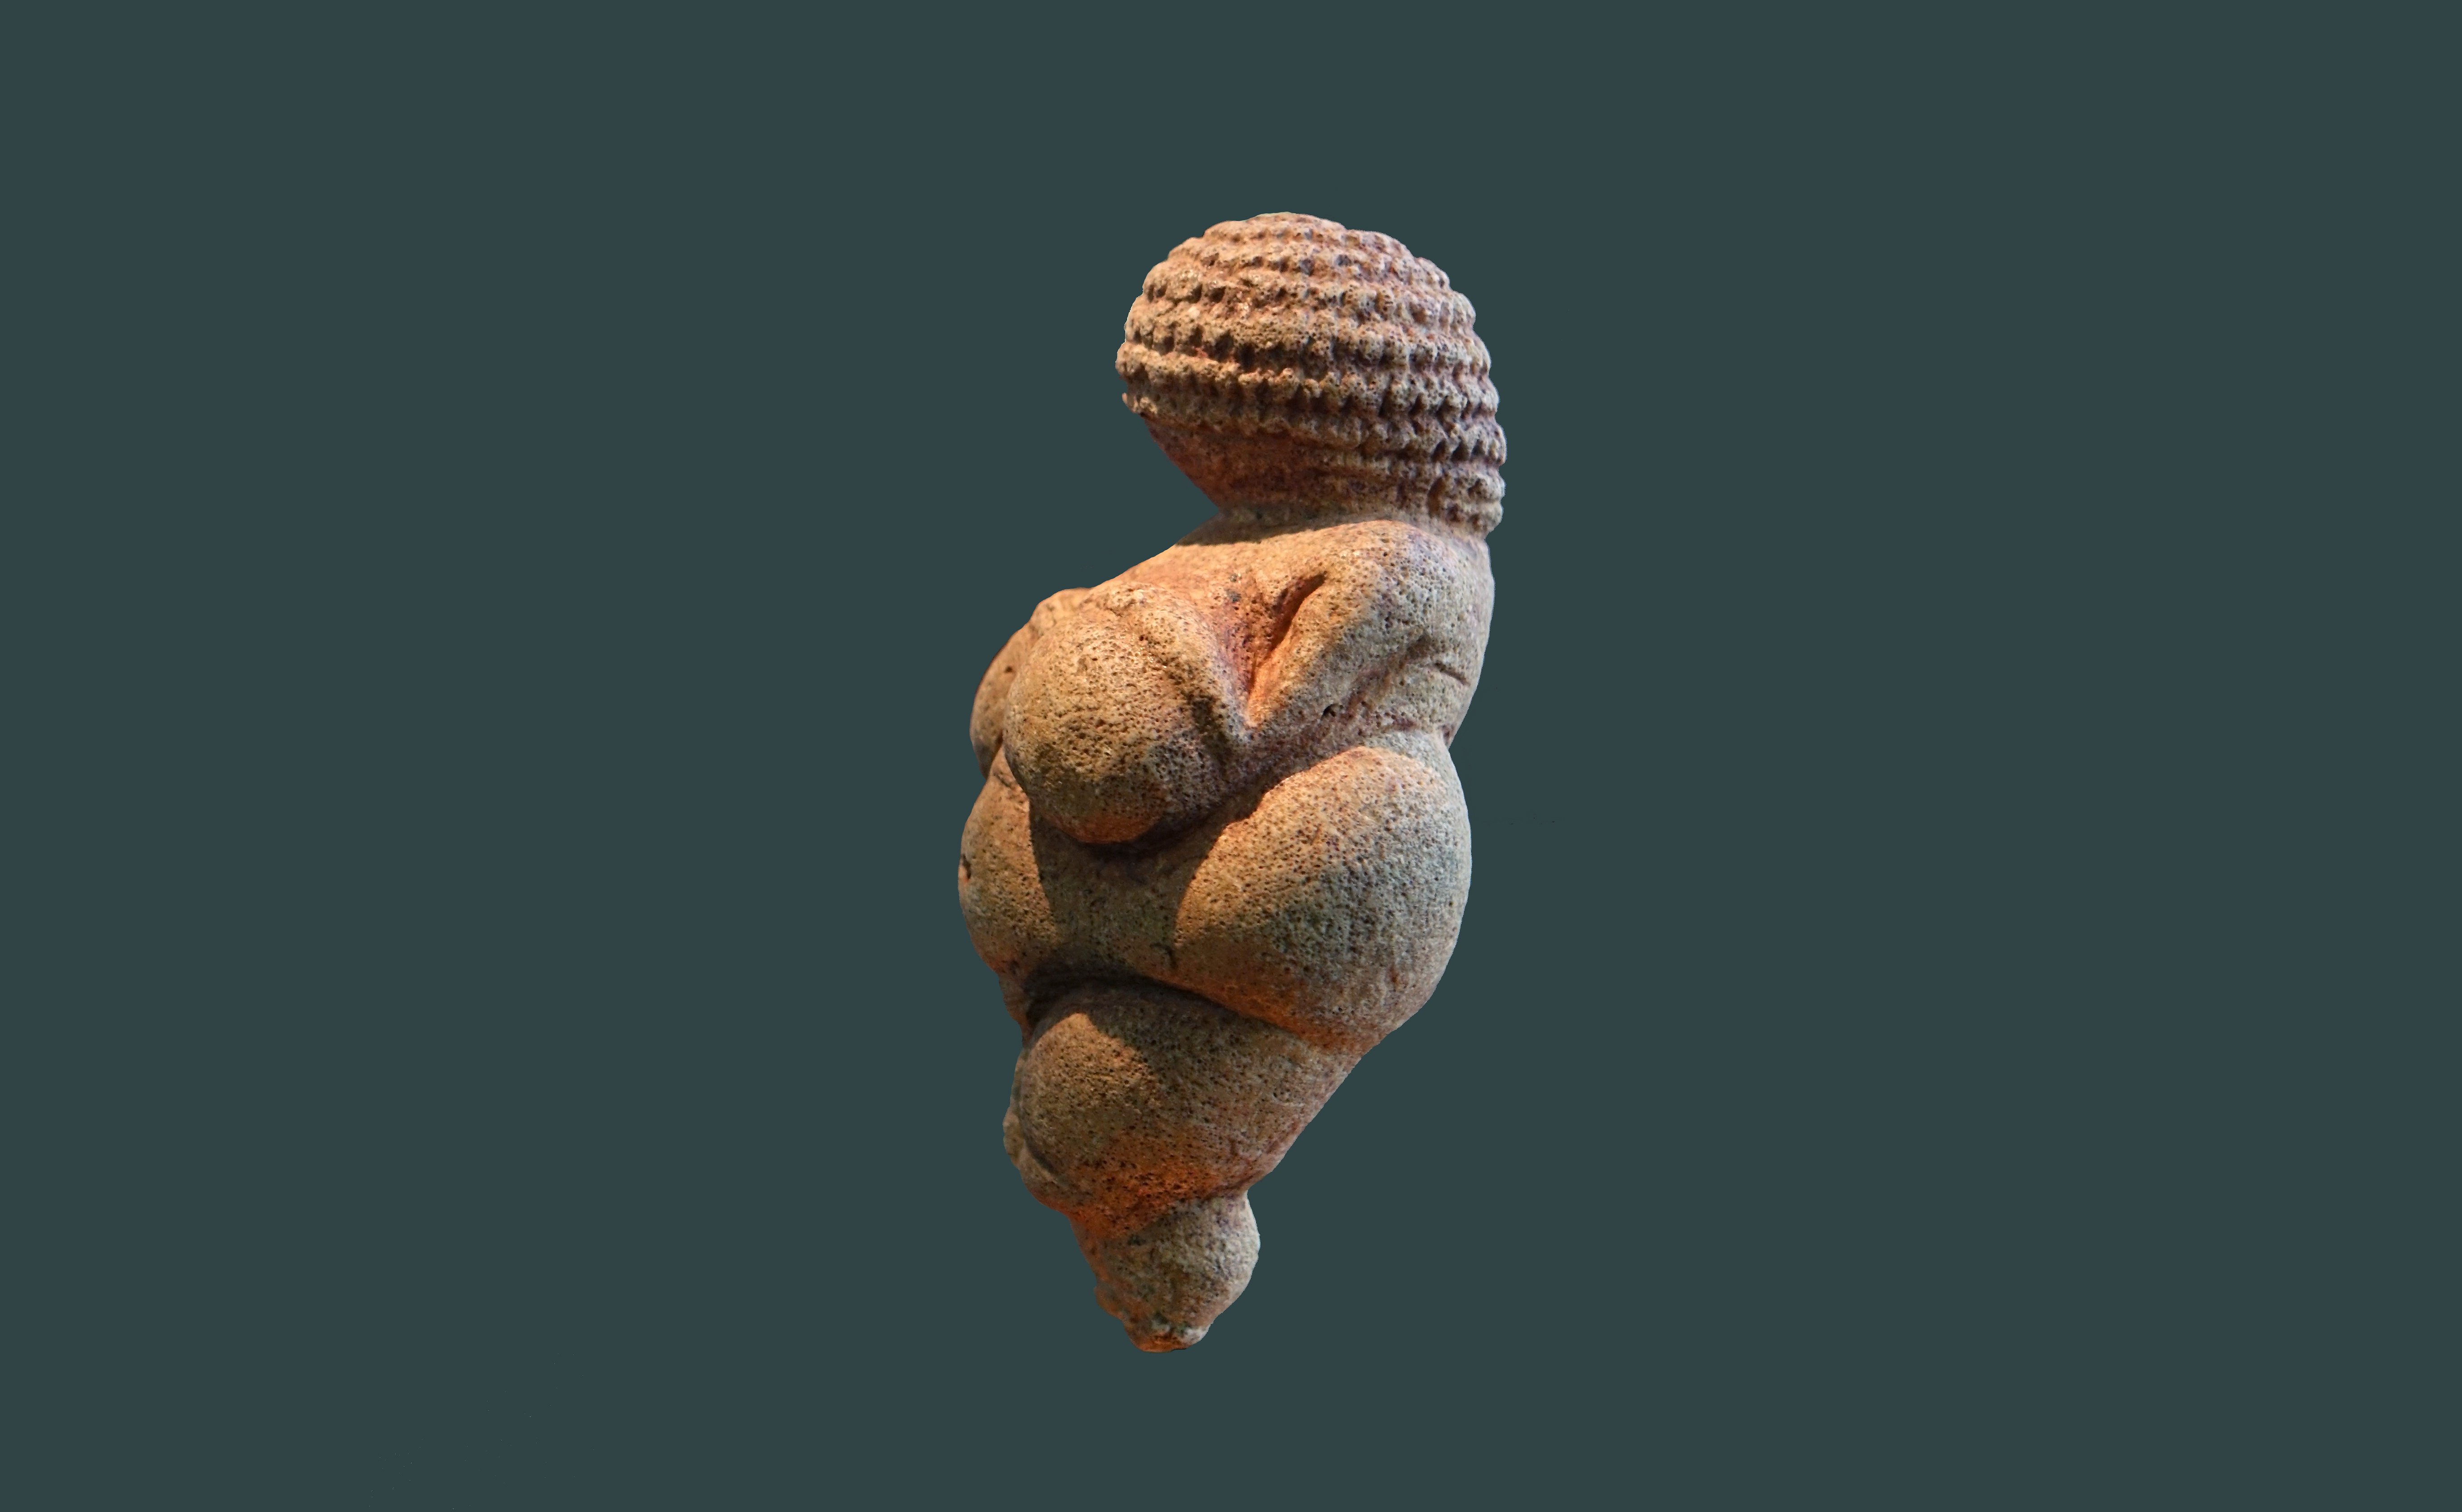 Venus de Willendorf, c. 24,000-22,000 B.C.E., piedra caliza 11.1 cm de altura (Museo Naturhistorisches, Viena)